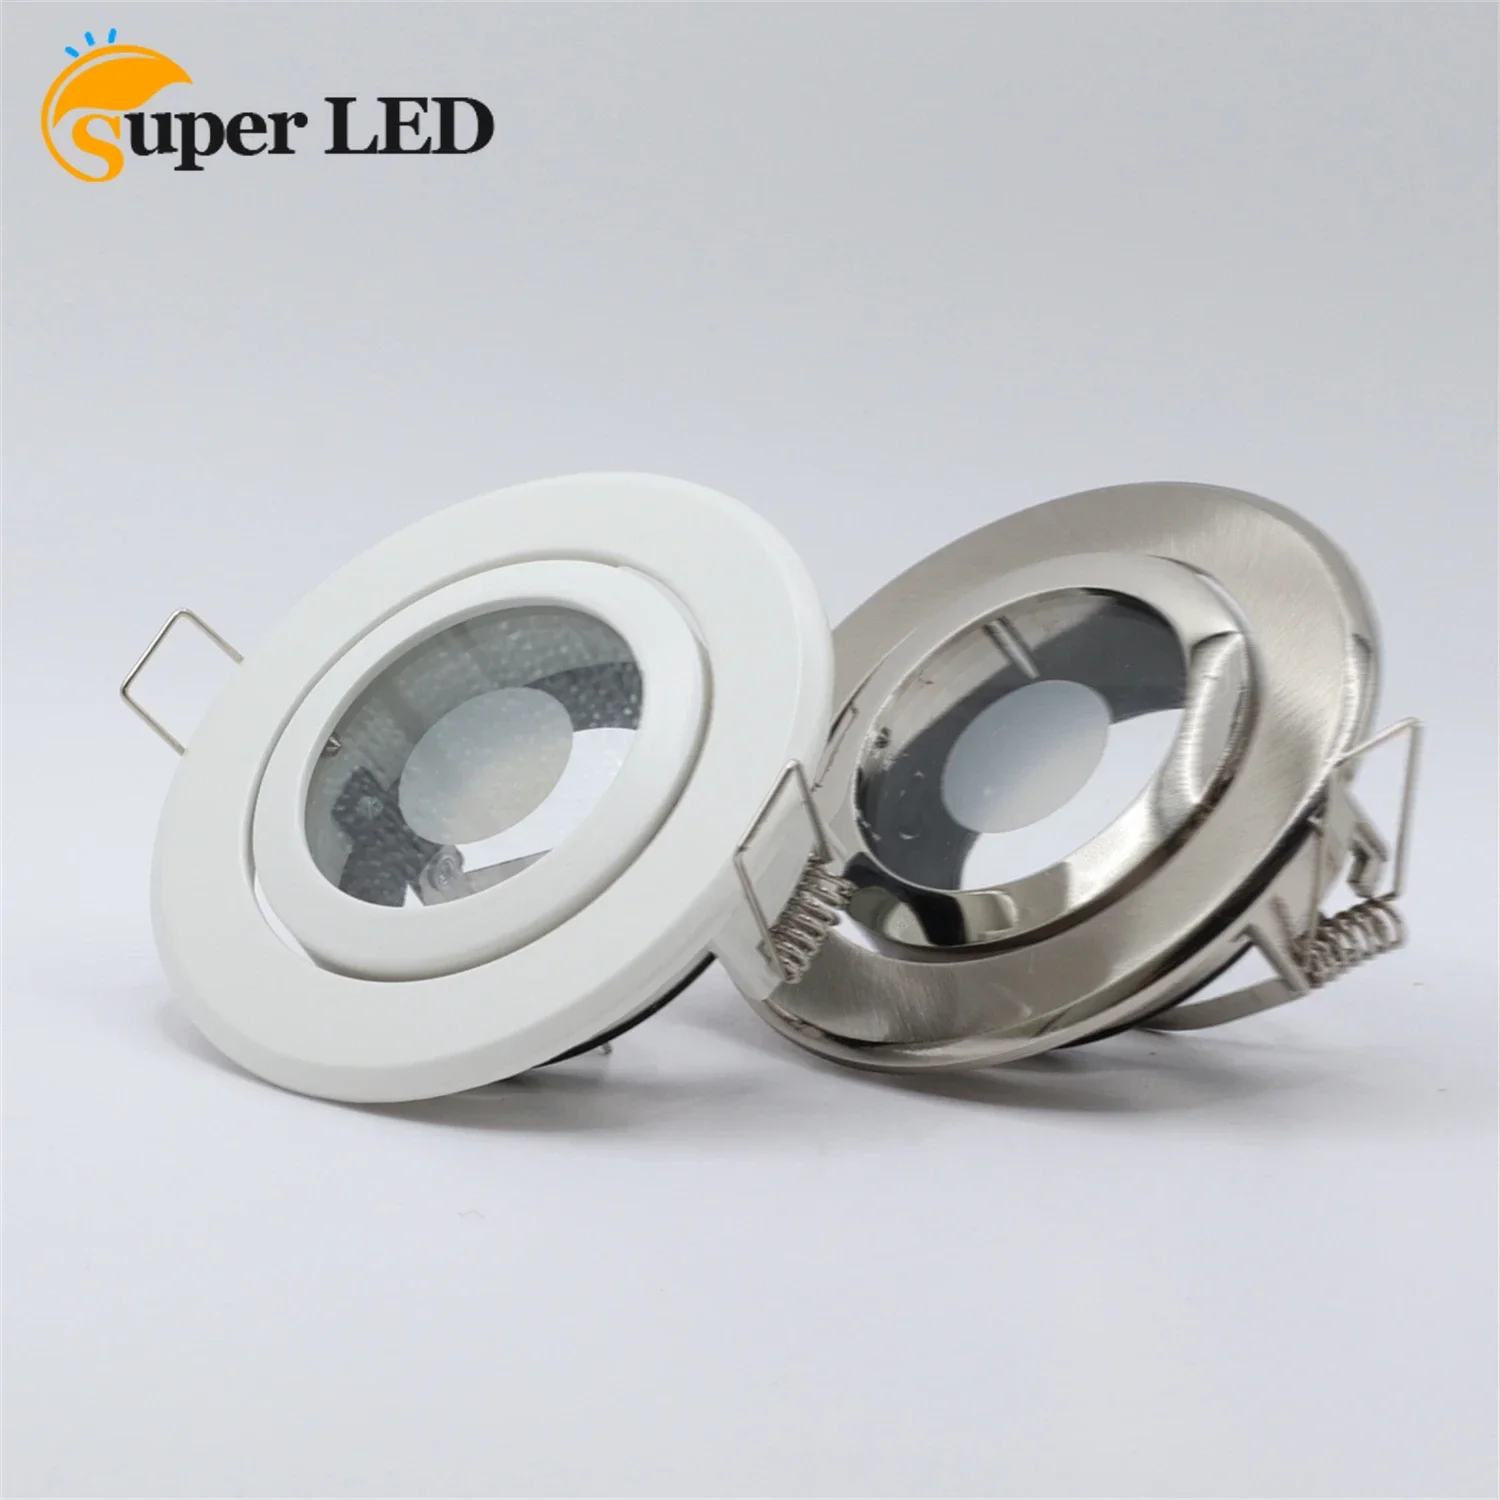 LED GU10/MR16  Downlight Recessed Ceiling Spot Light Lamp Shade